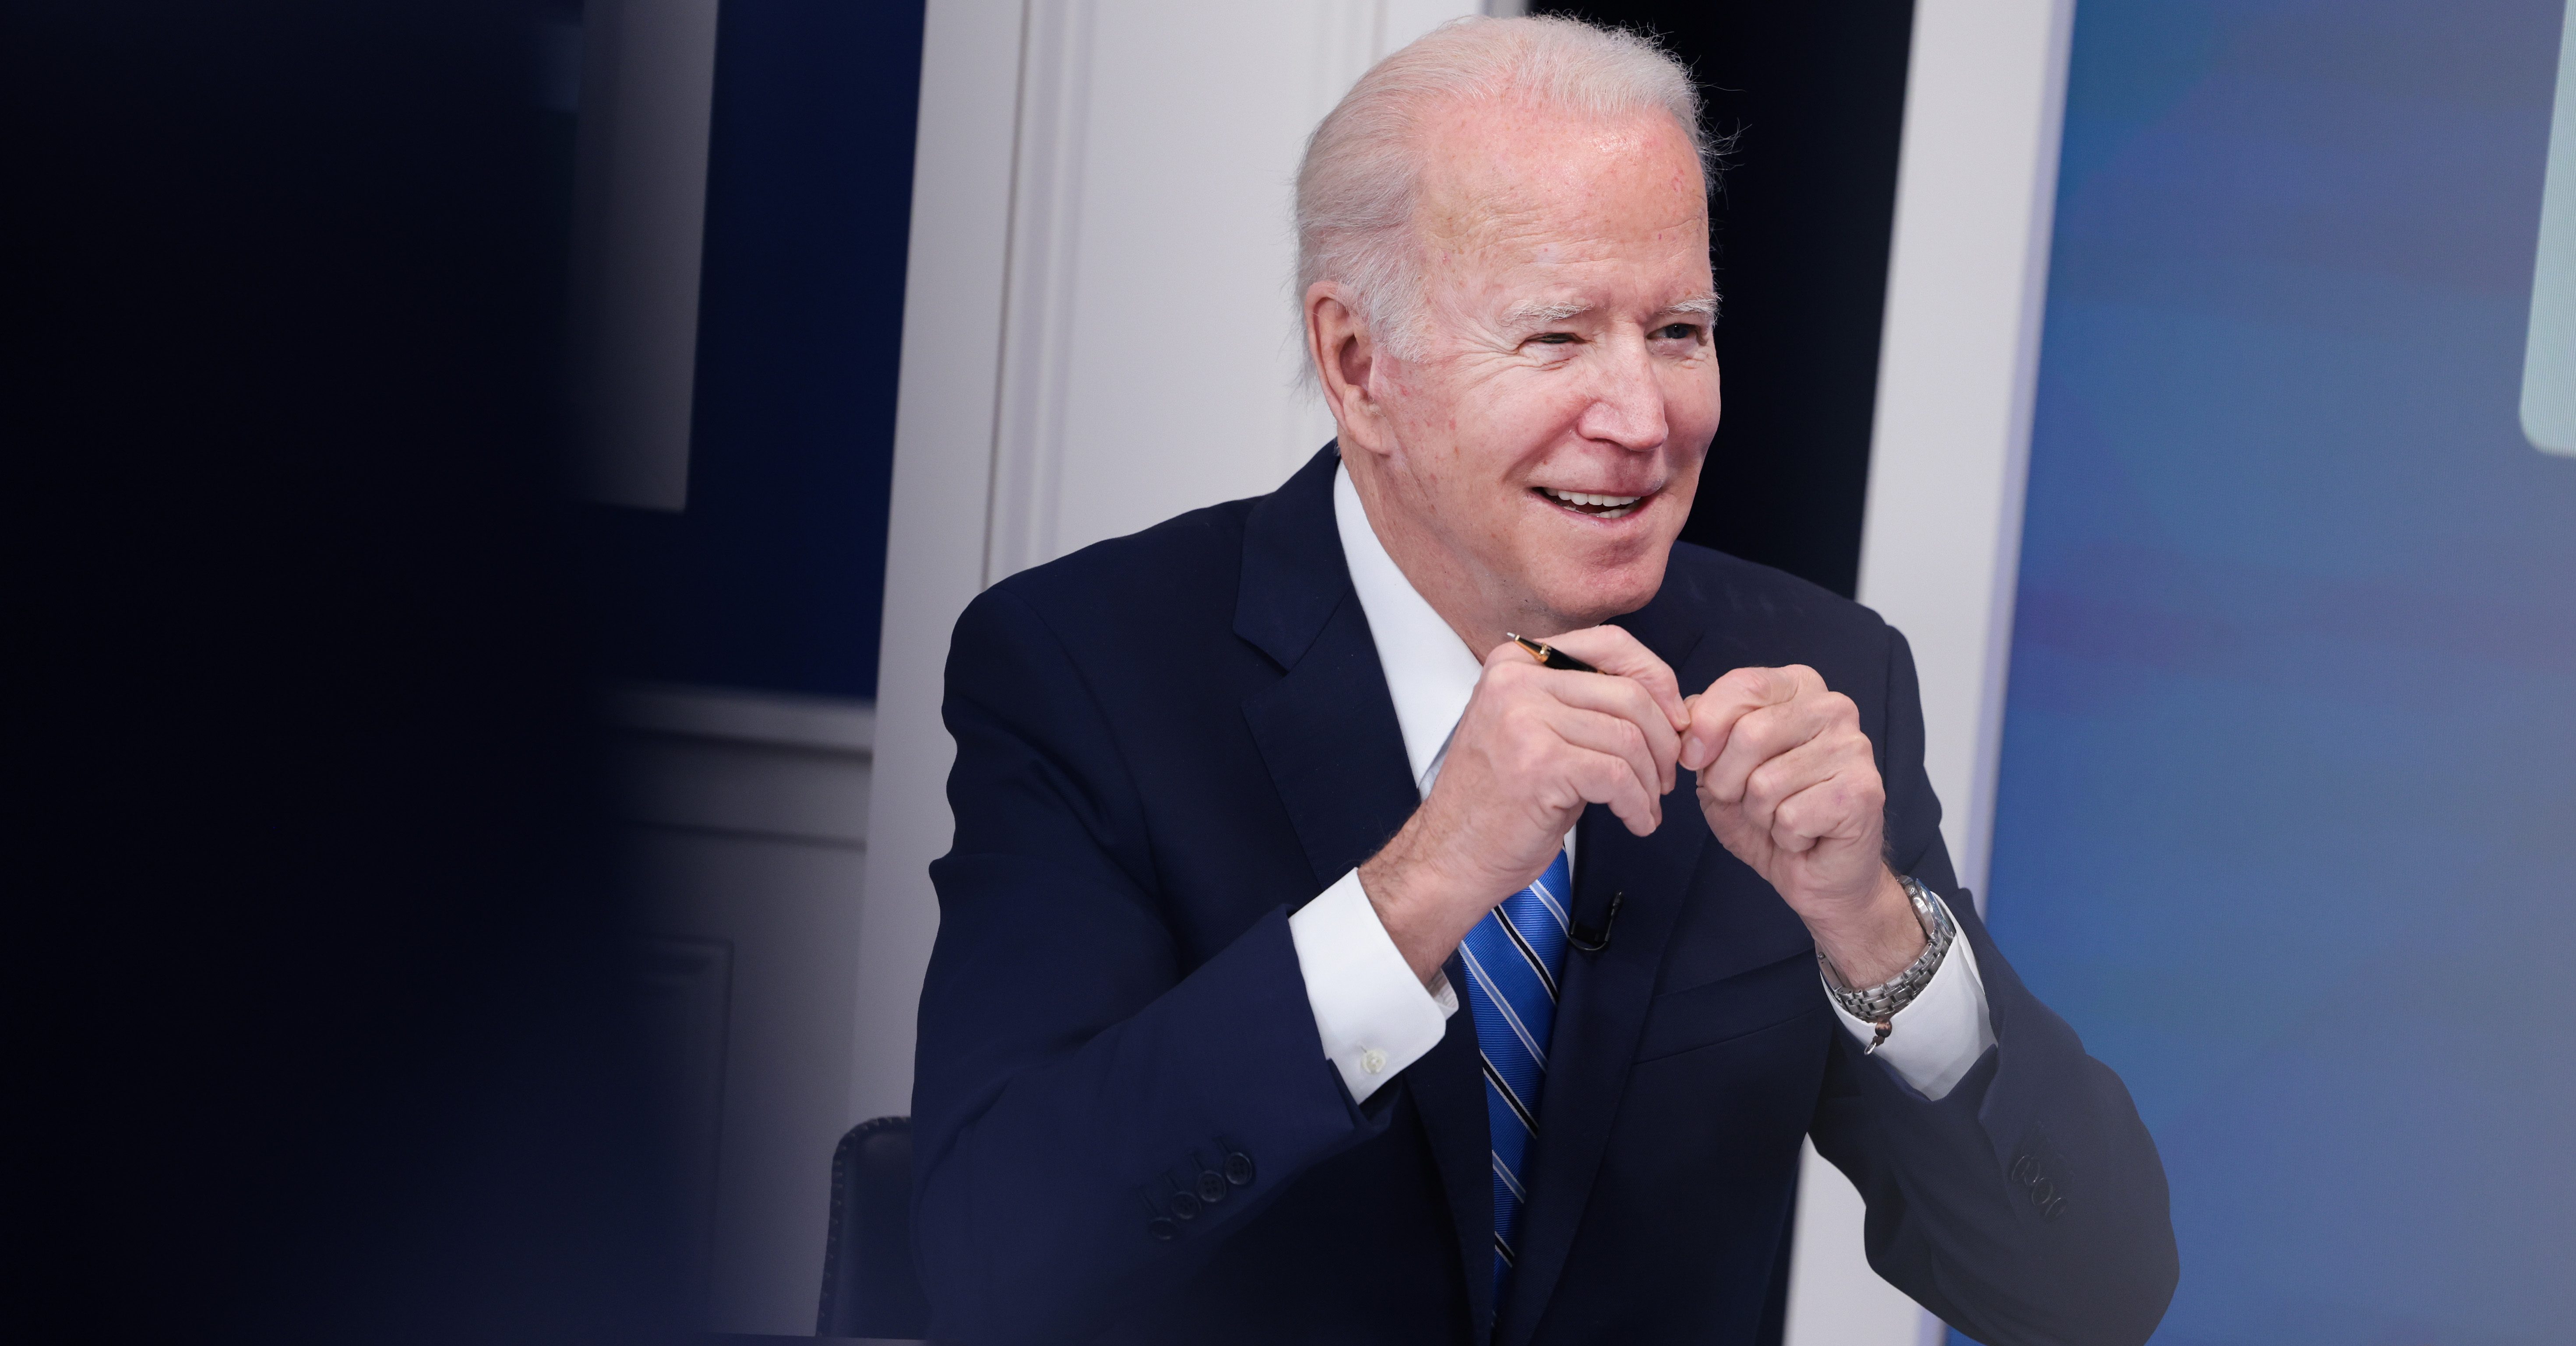 Cyber provisions, workforce initiatives take effect as Biden signs NDAA